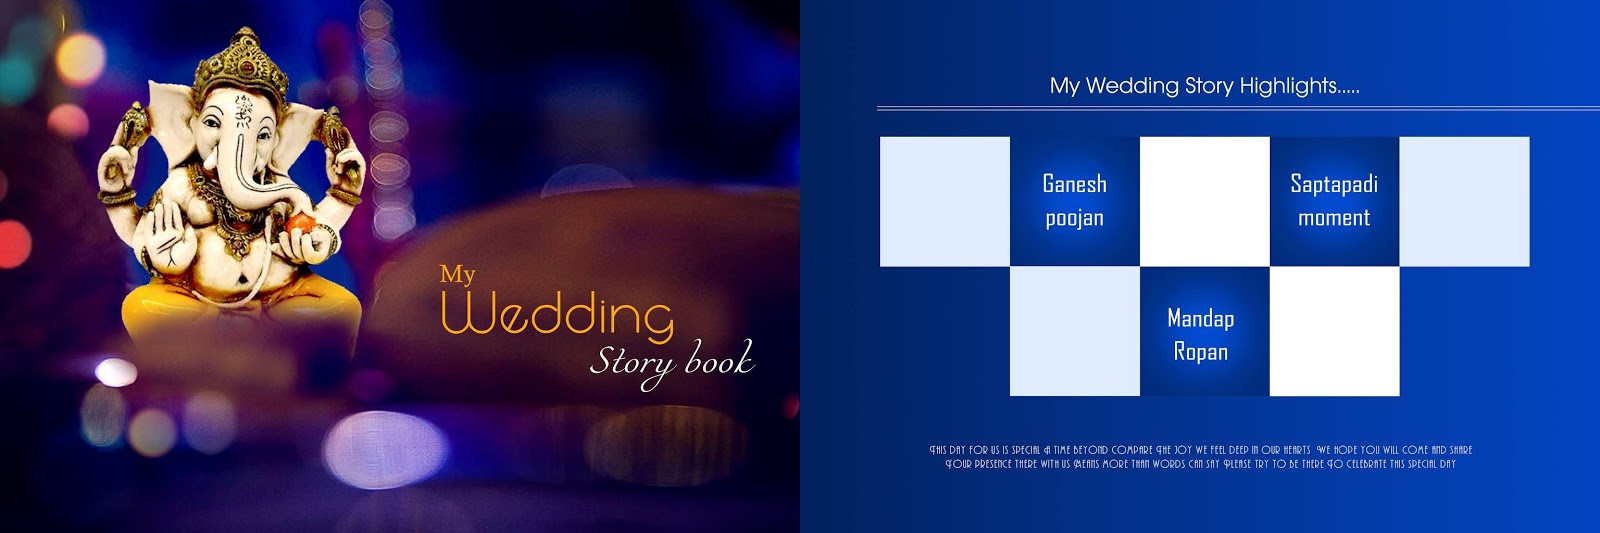 Download Psd Wedding Photo Album Design Templates Wedding Album Design Viddhil Part 2 Psd File File 200 Dpi Free Download With Download Link PSD Mockup Templates